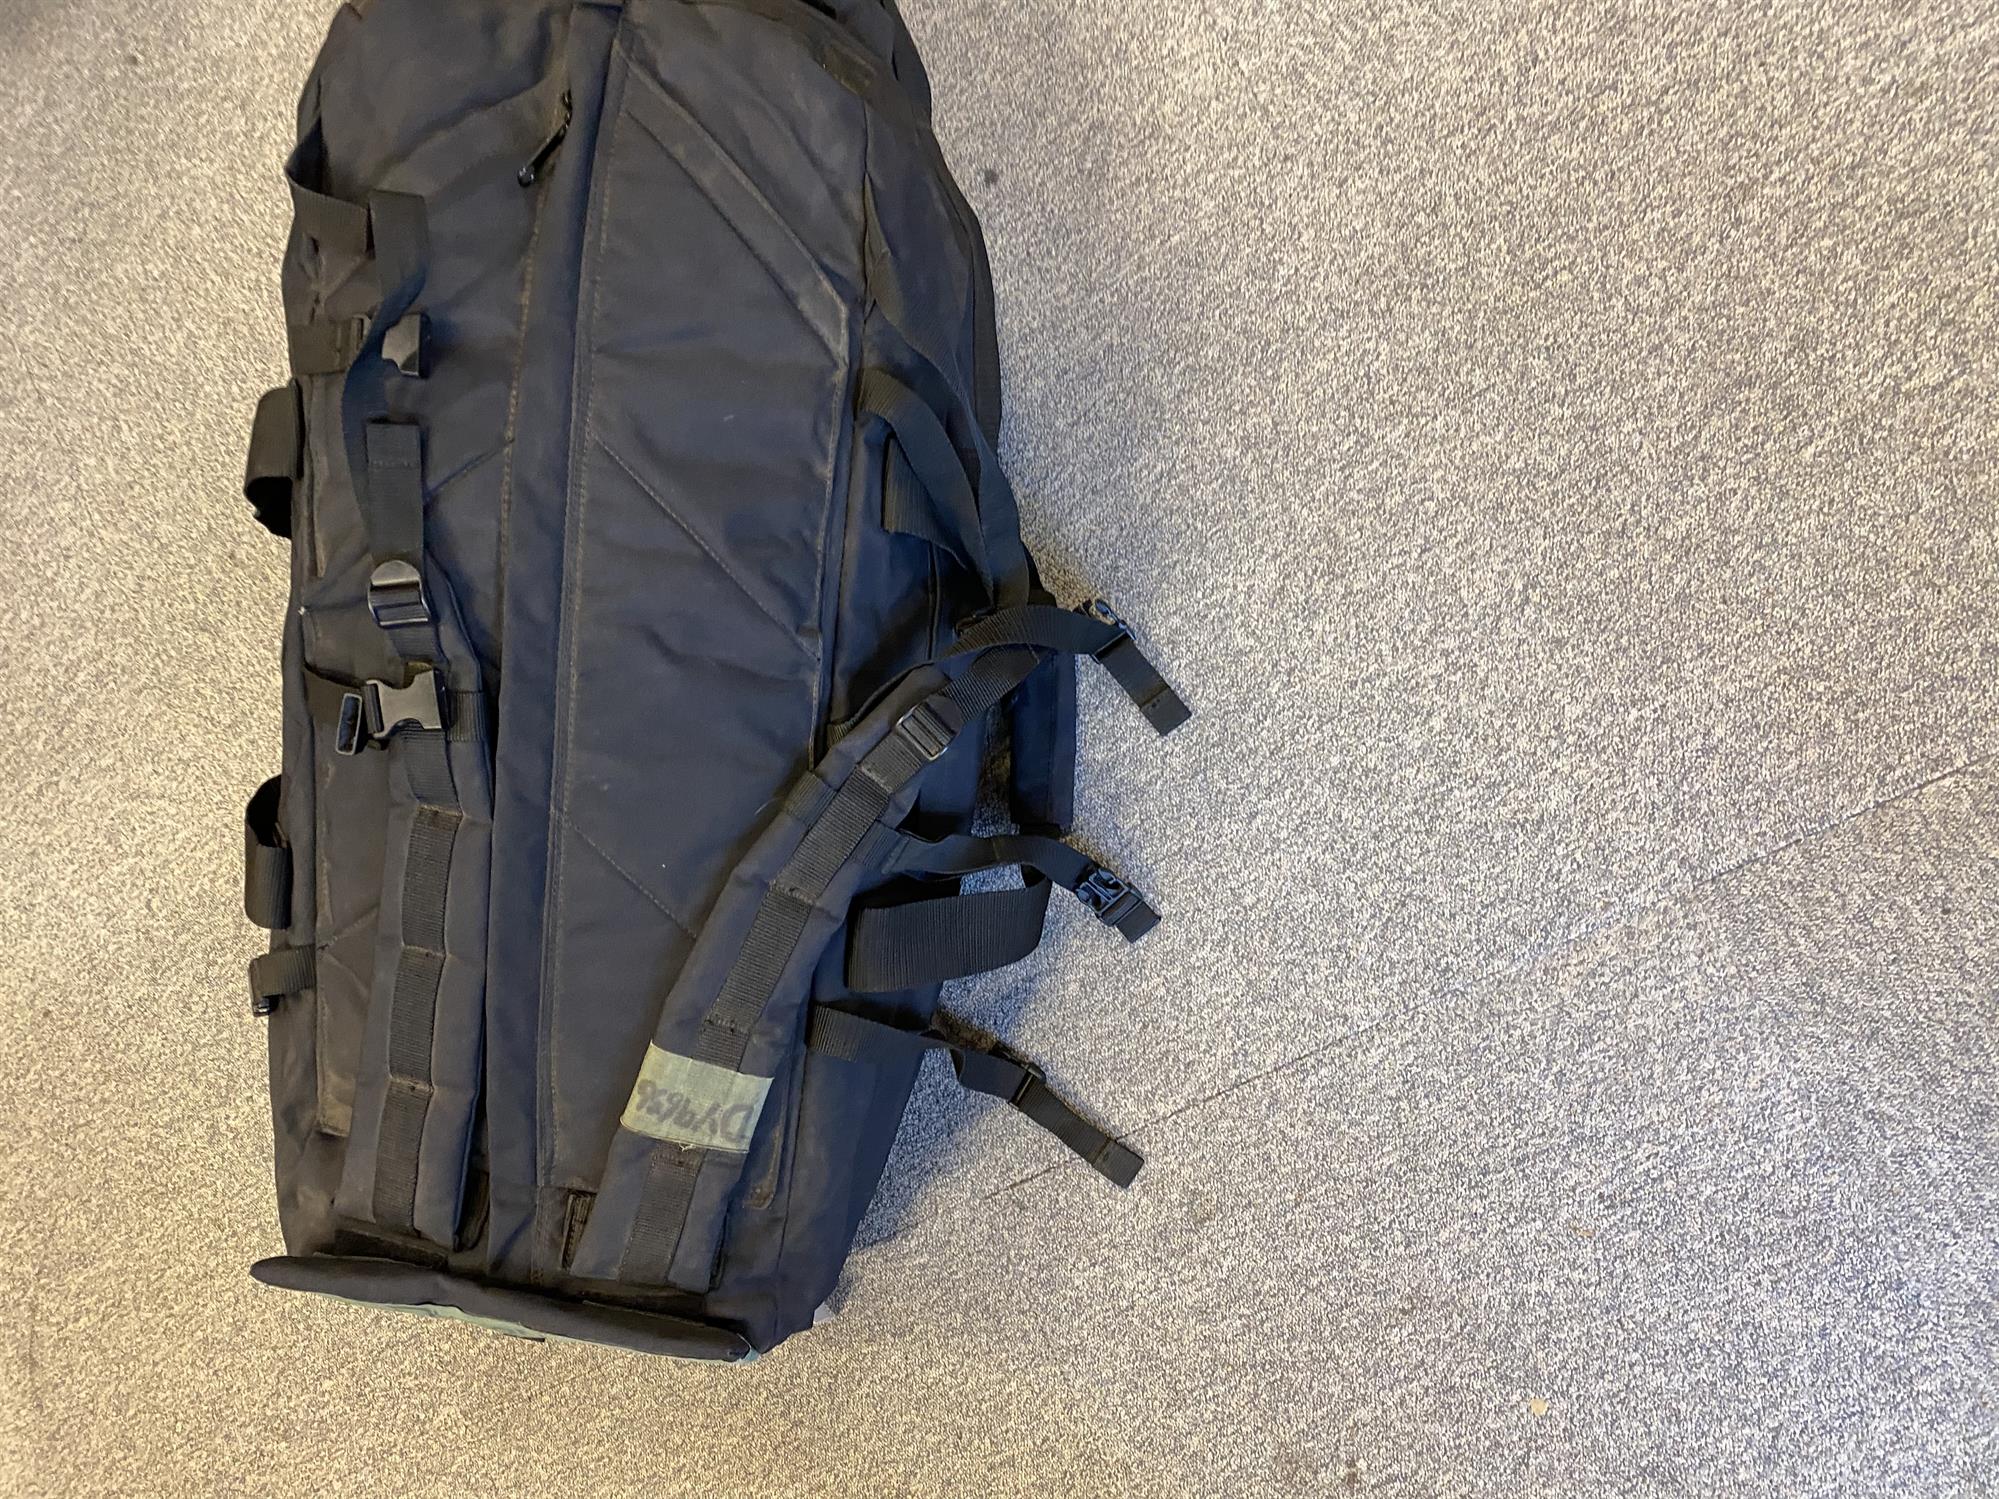 British army surplus black deployment bag, G2, 100 litres | eBay